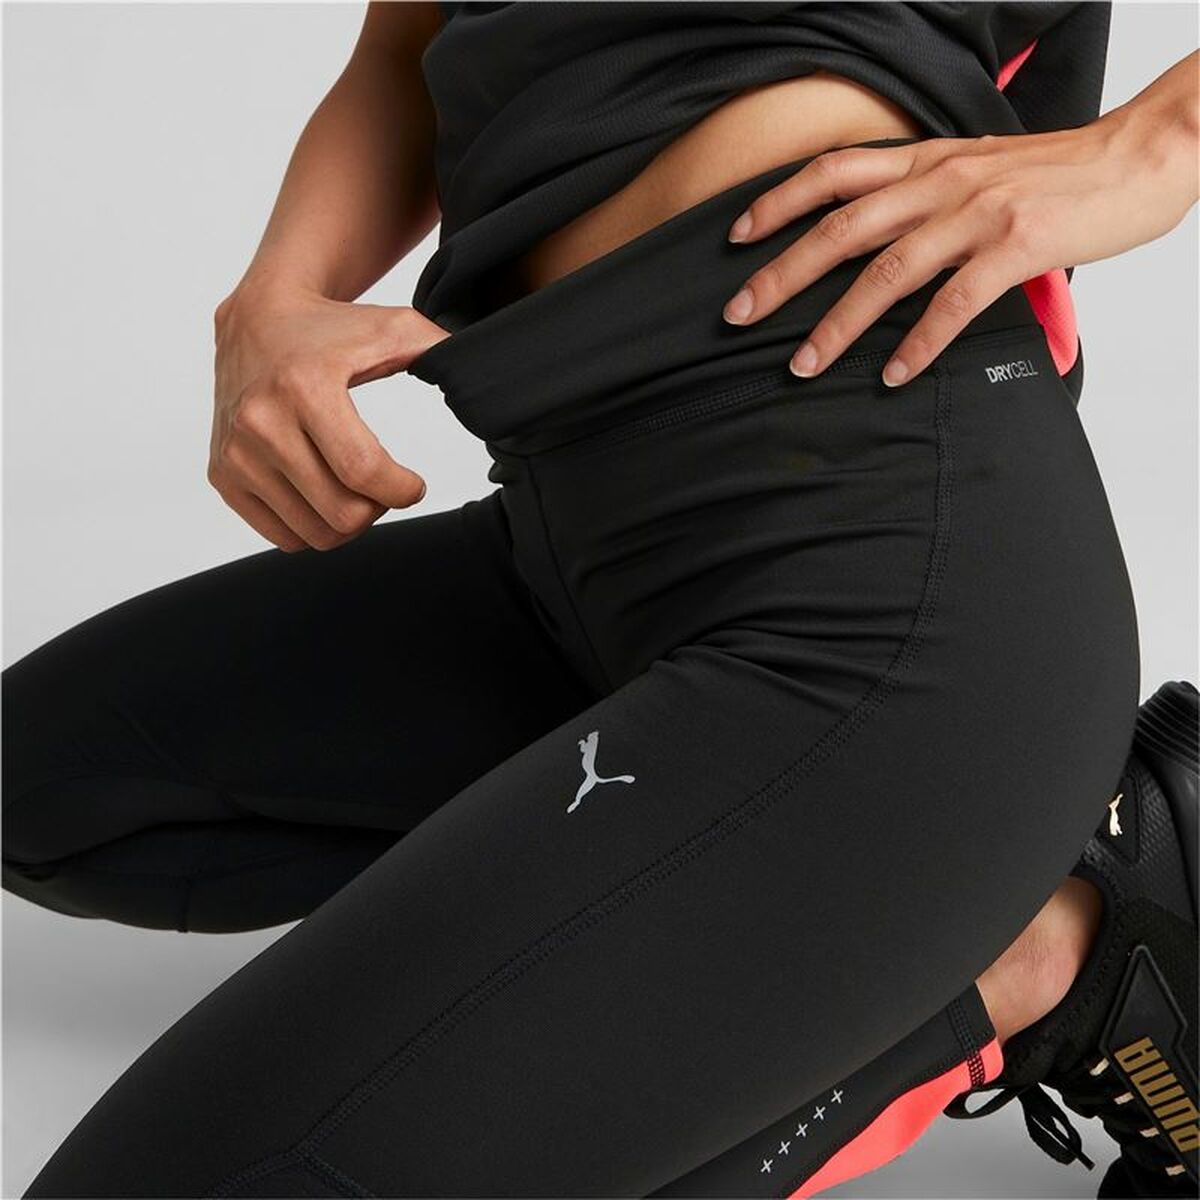 Sport leggings for Women Puma Favourite Black